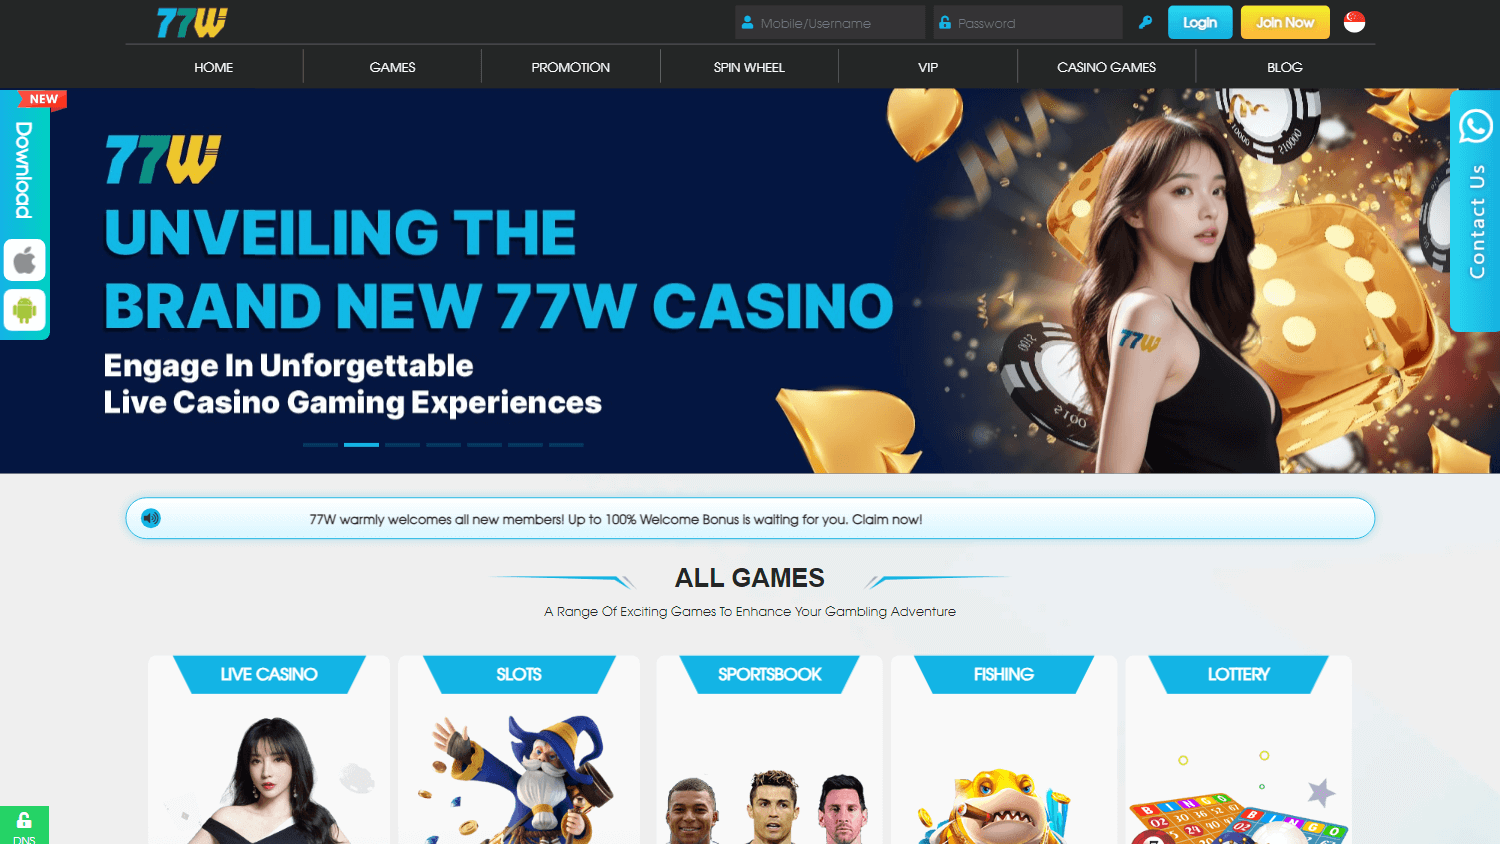 77w_casino_game_gallery_desktop